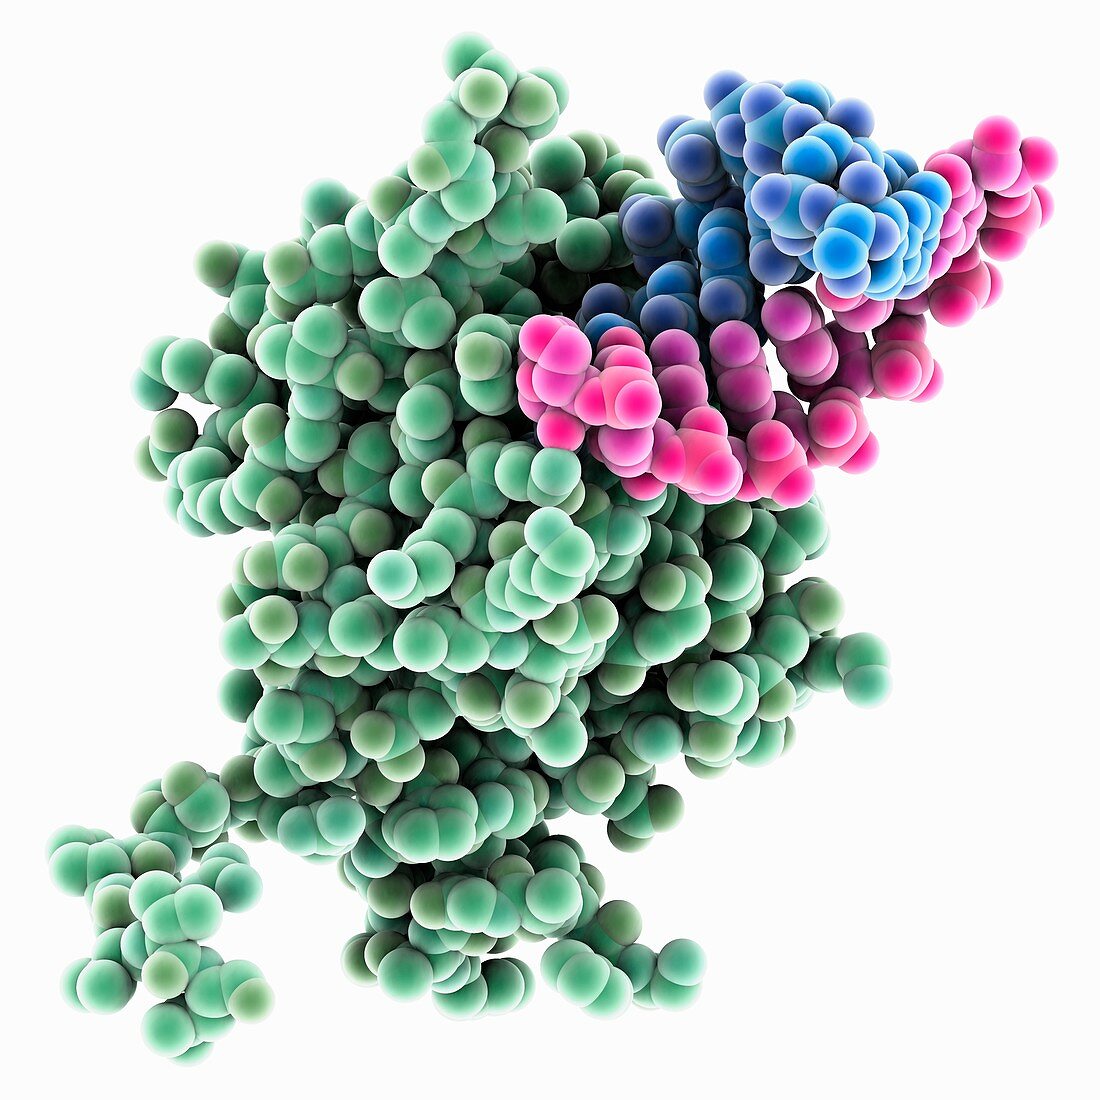 Lassa virus nucleoprotein complex